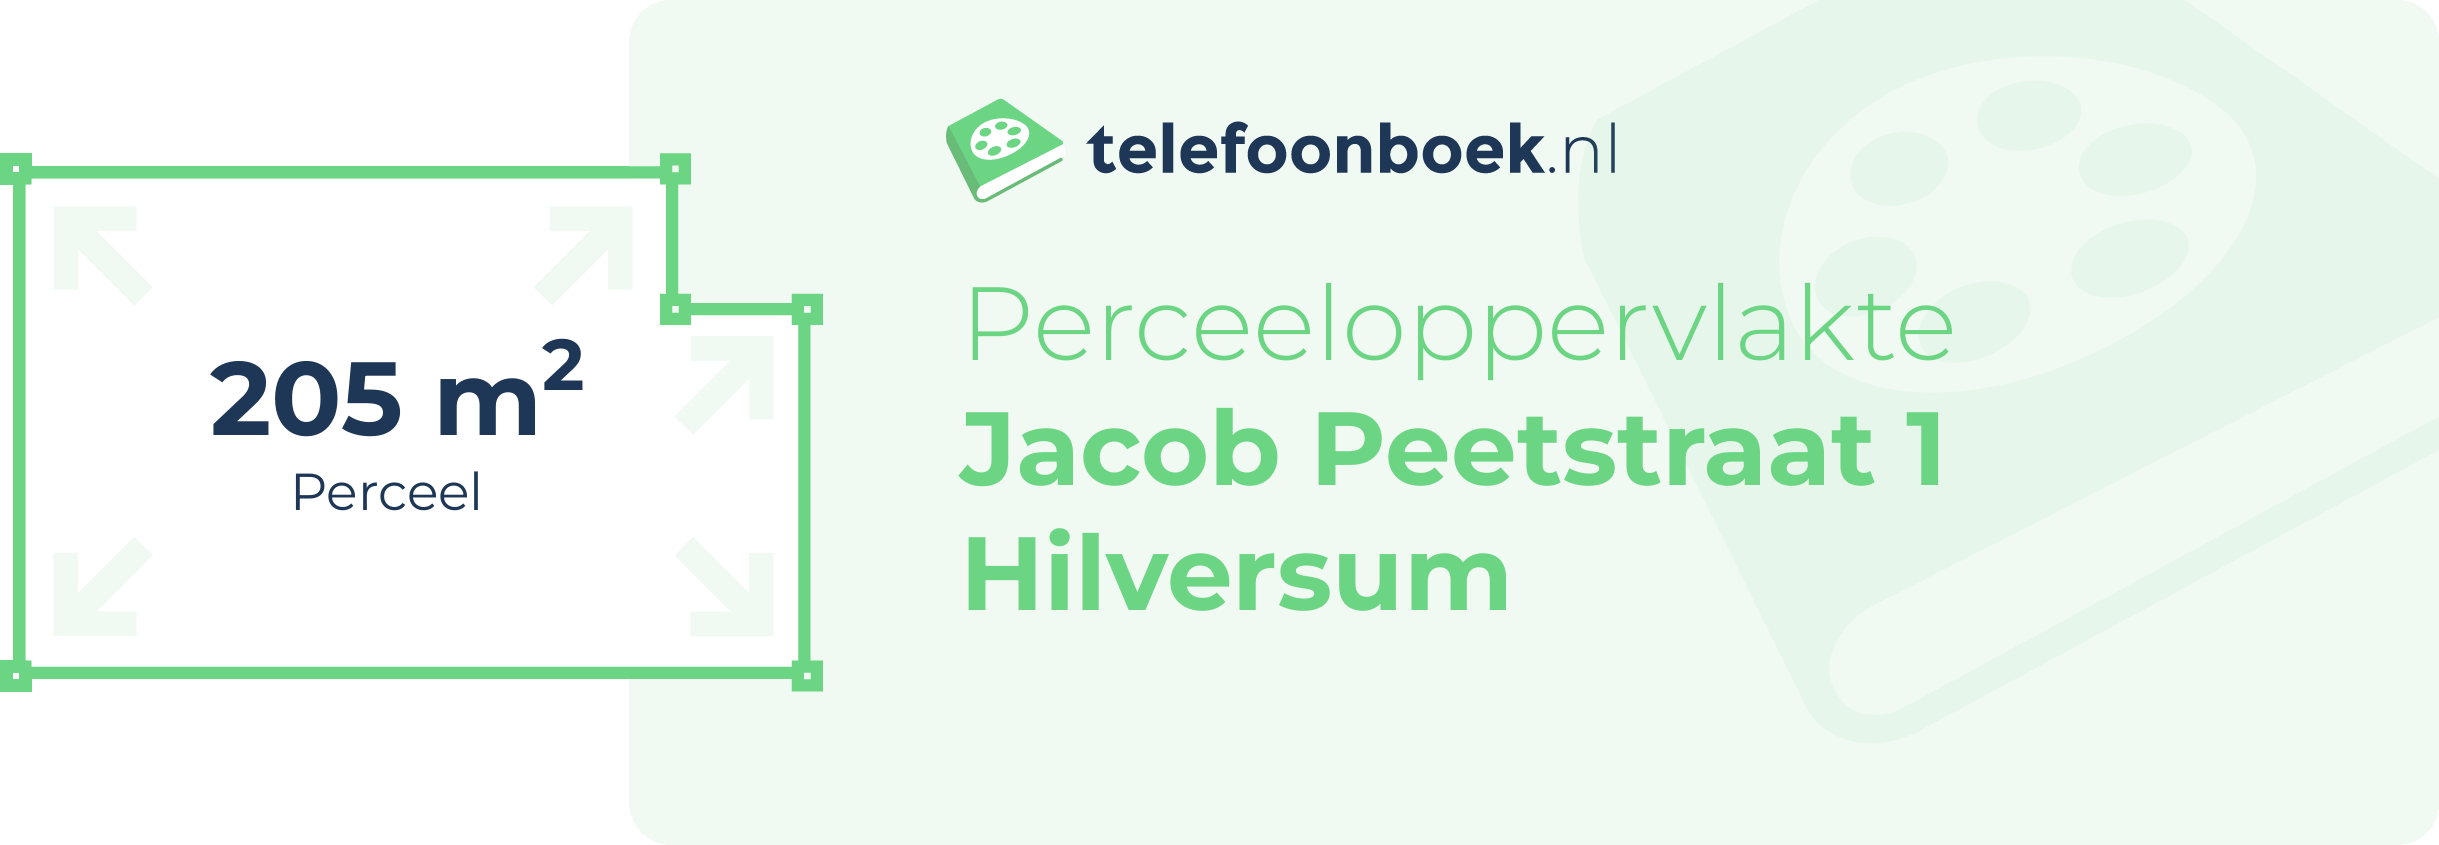 Perceeloppervlakte Jacob Peetstraat 1 Hilversum